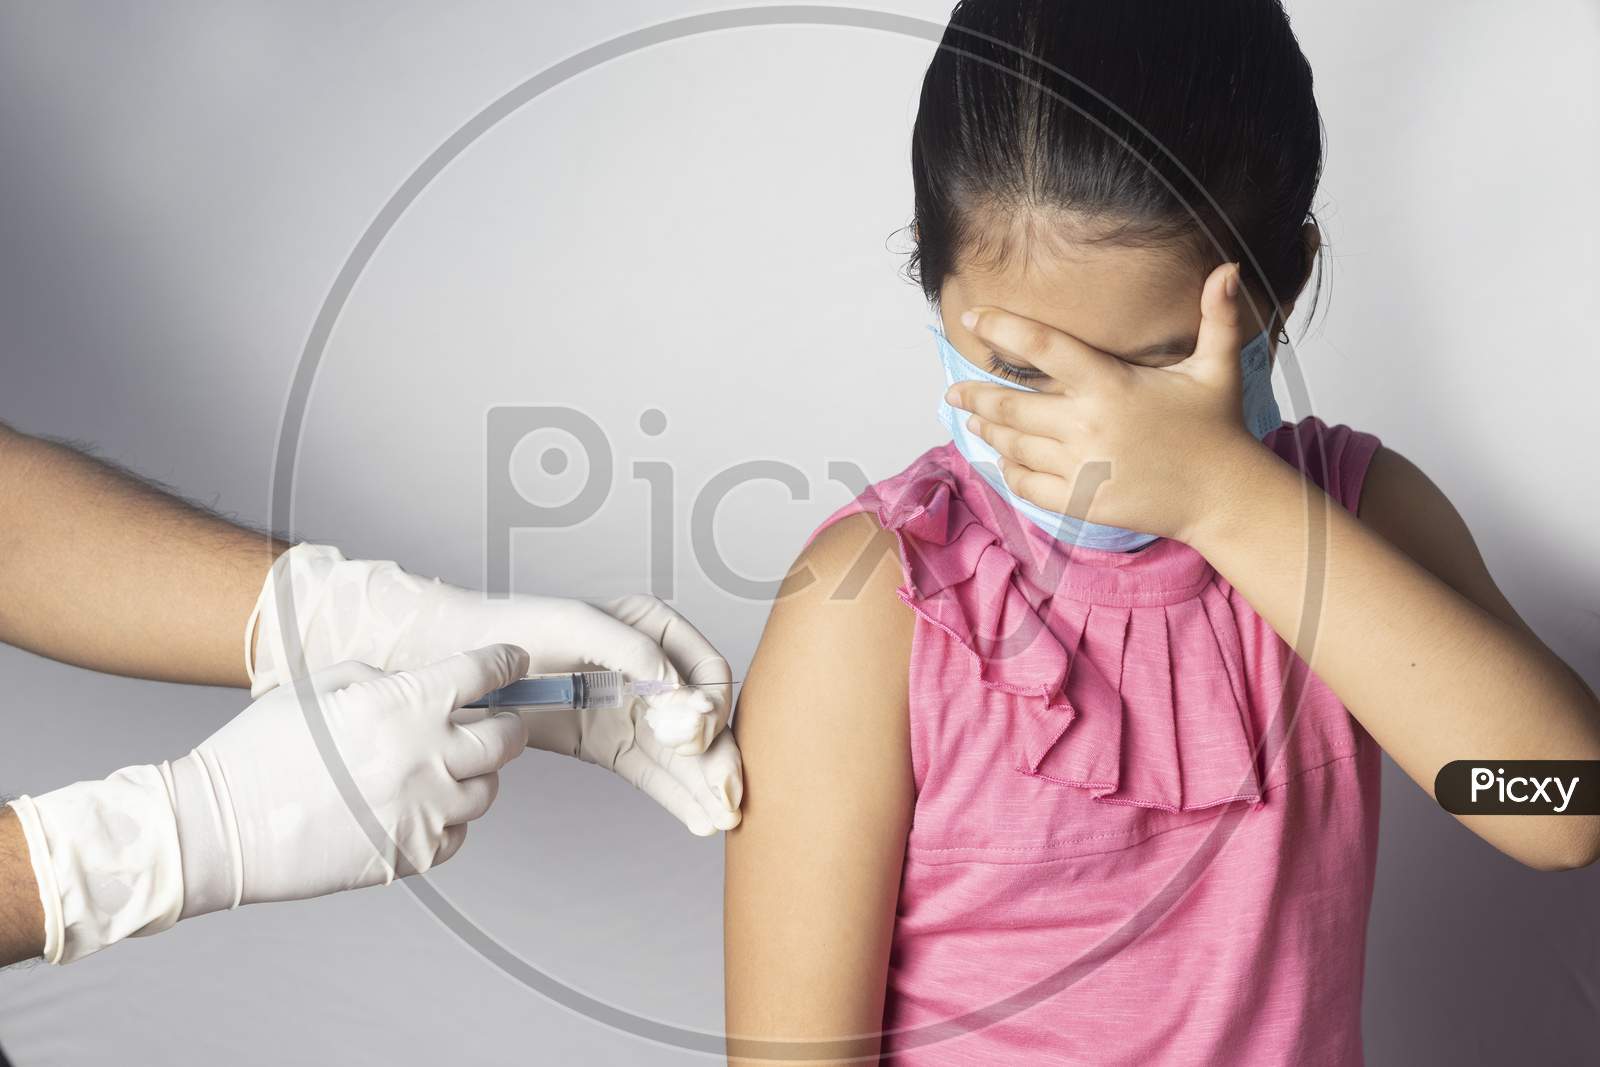 Vaccination For Children